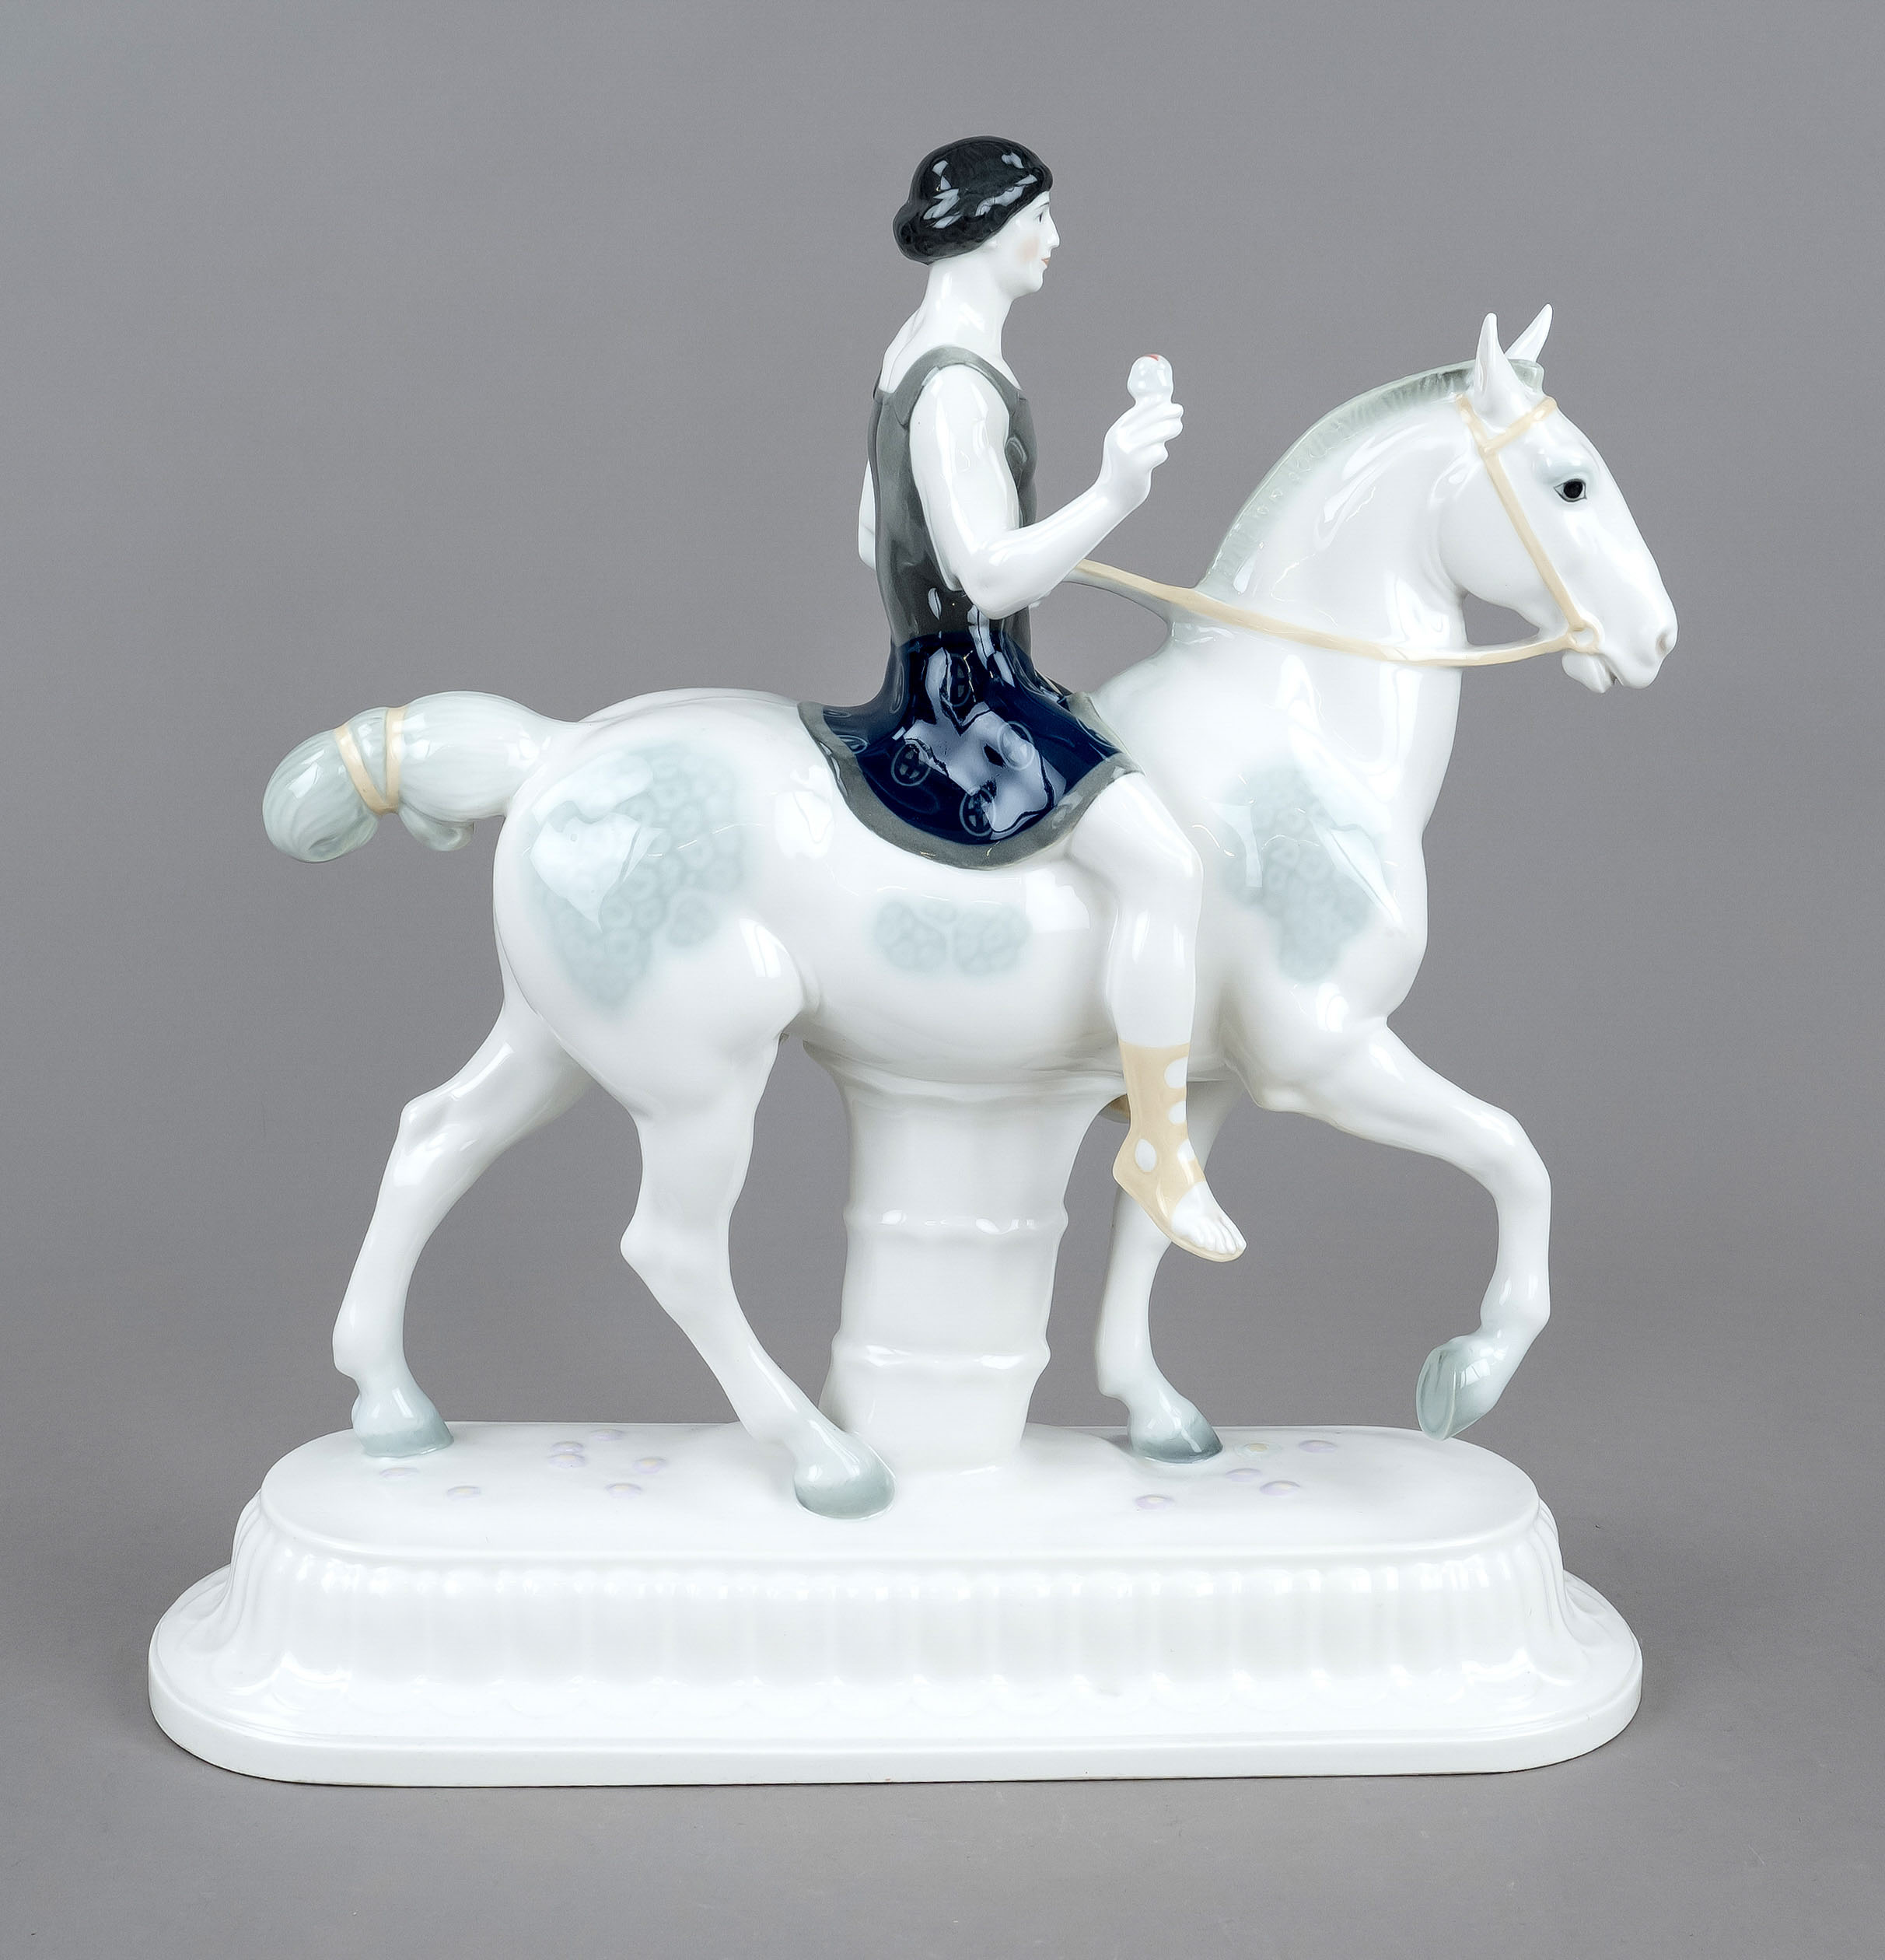 Art Nouveau equestrian figurine, KPM Berlin, mark before 1945, 1st choice, blue imperial orb mark, - Image 2 of 2